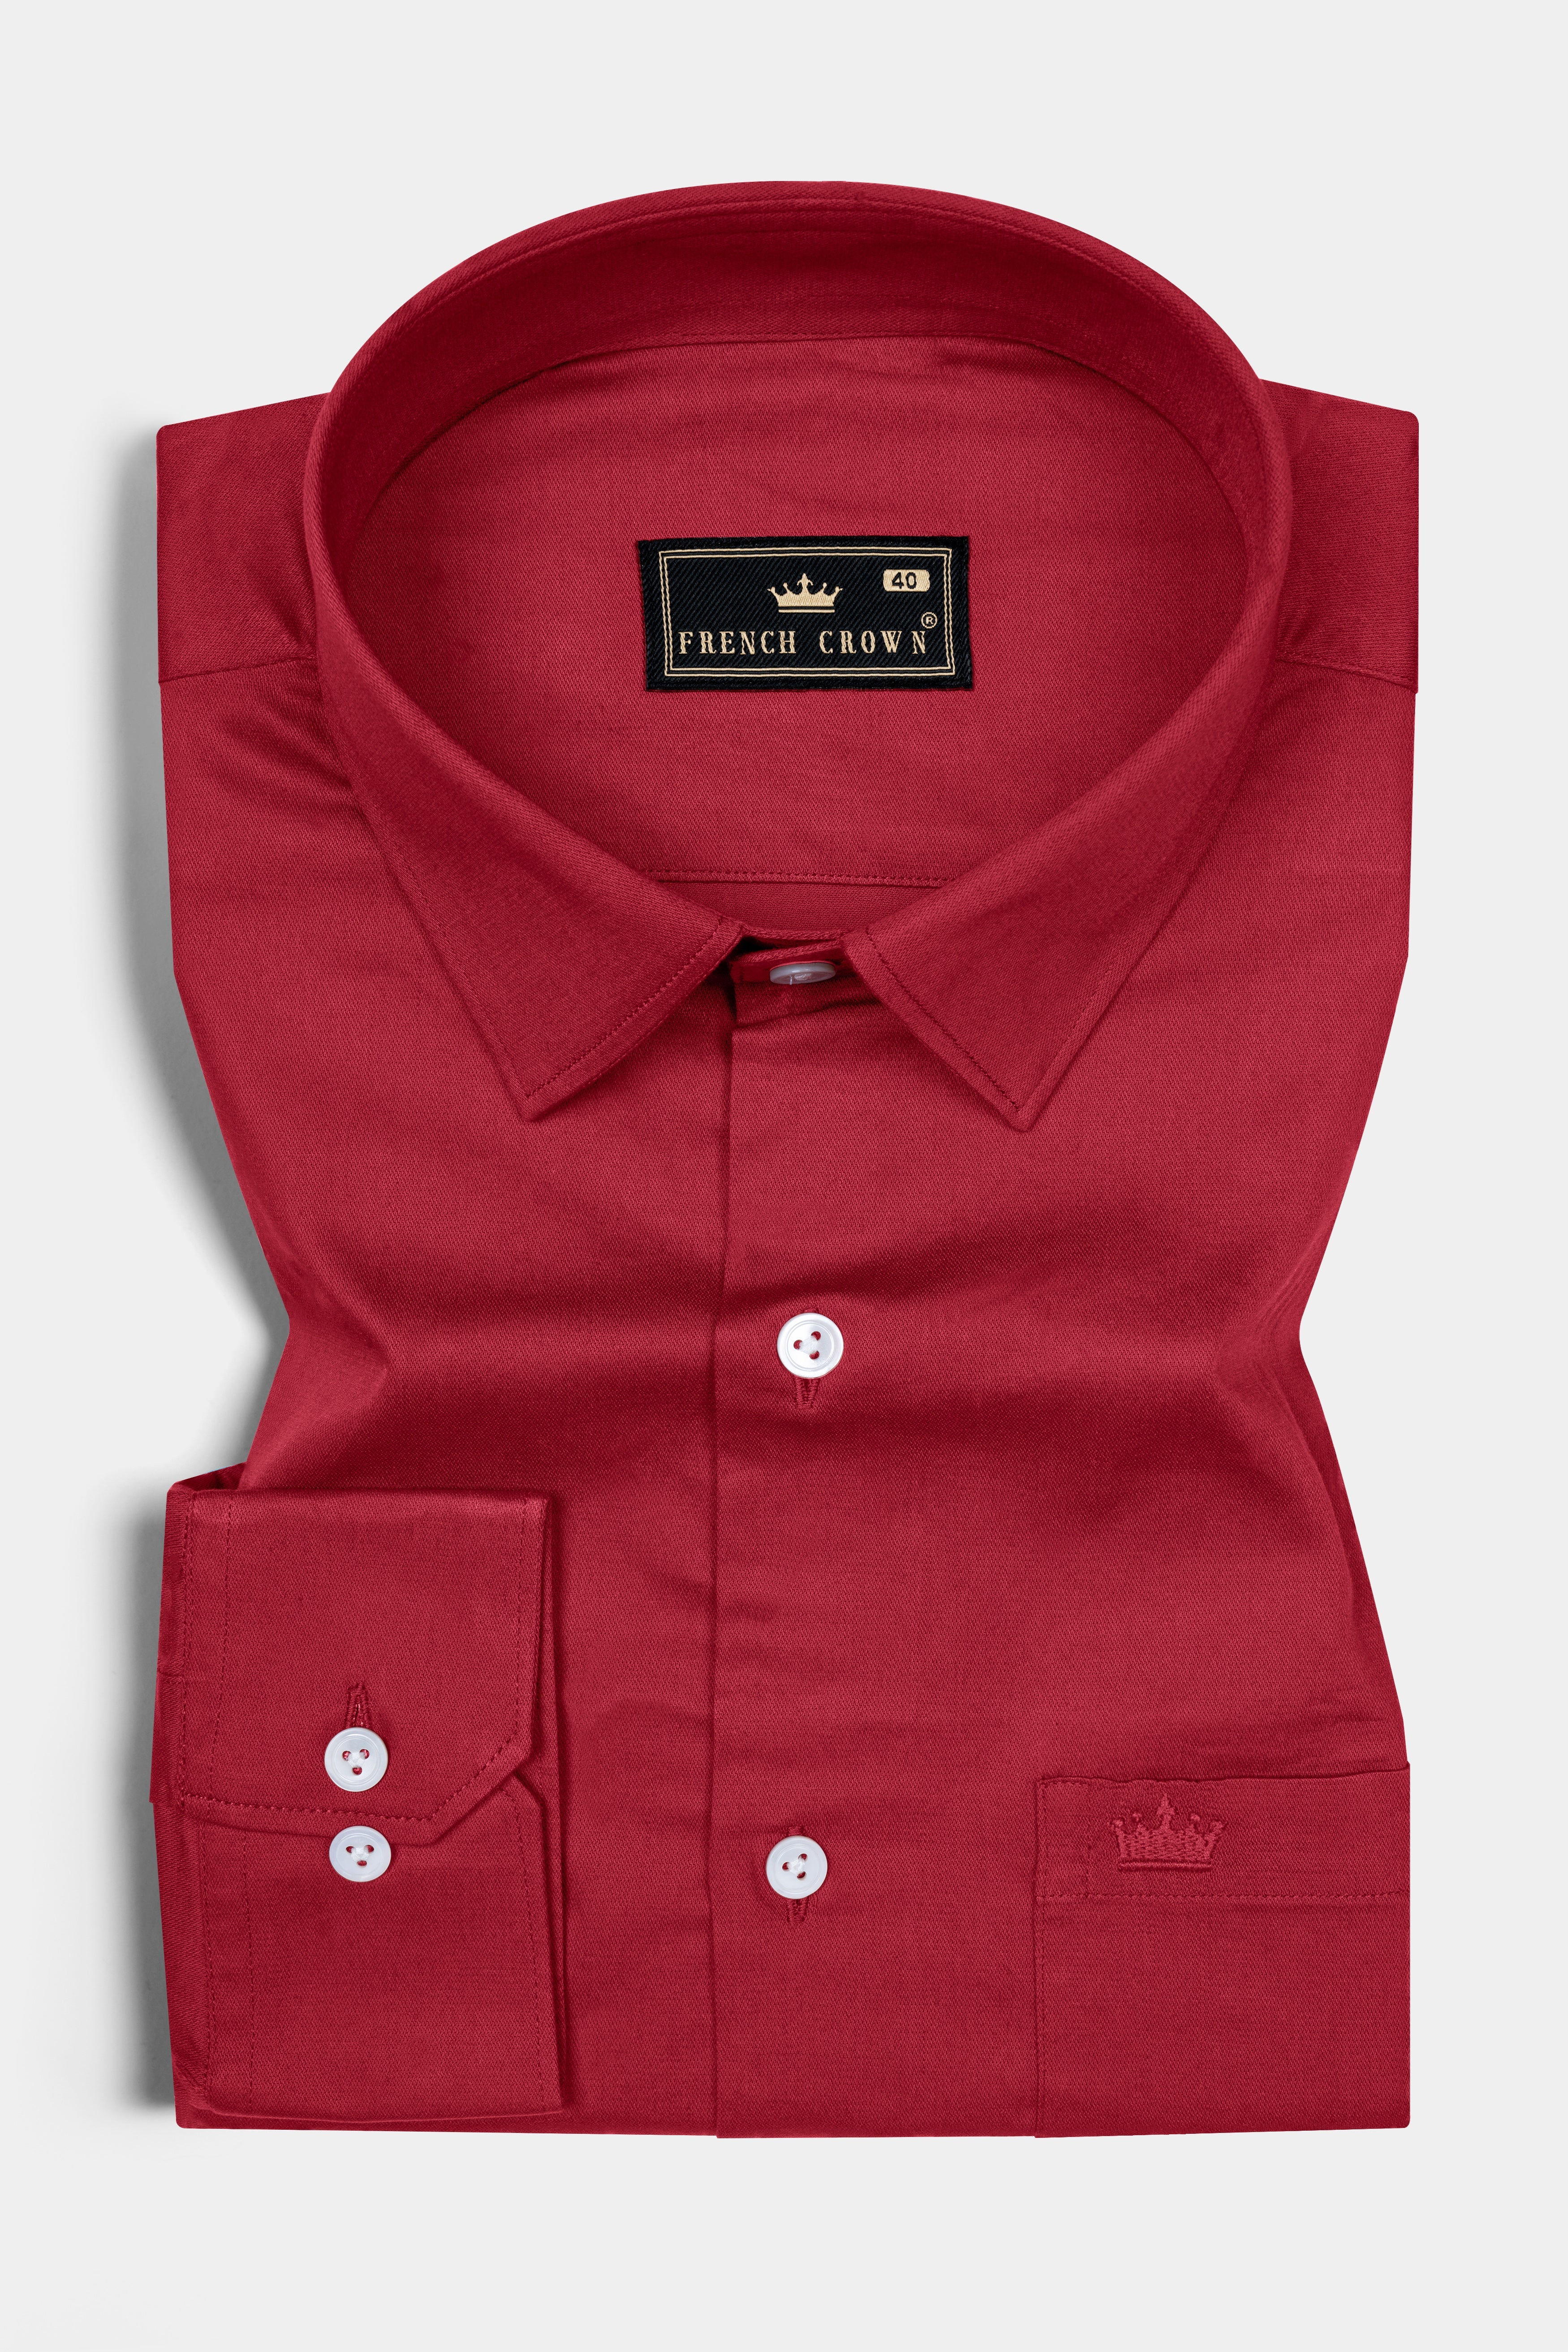 Stiletto Red Royal Oxford Cotton Shirt